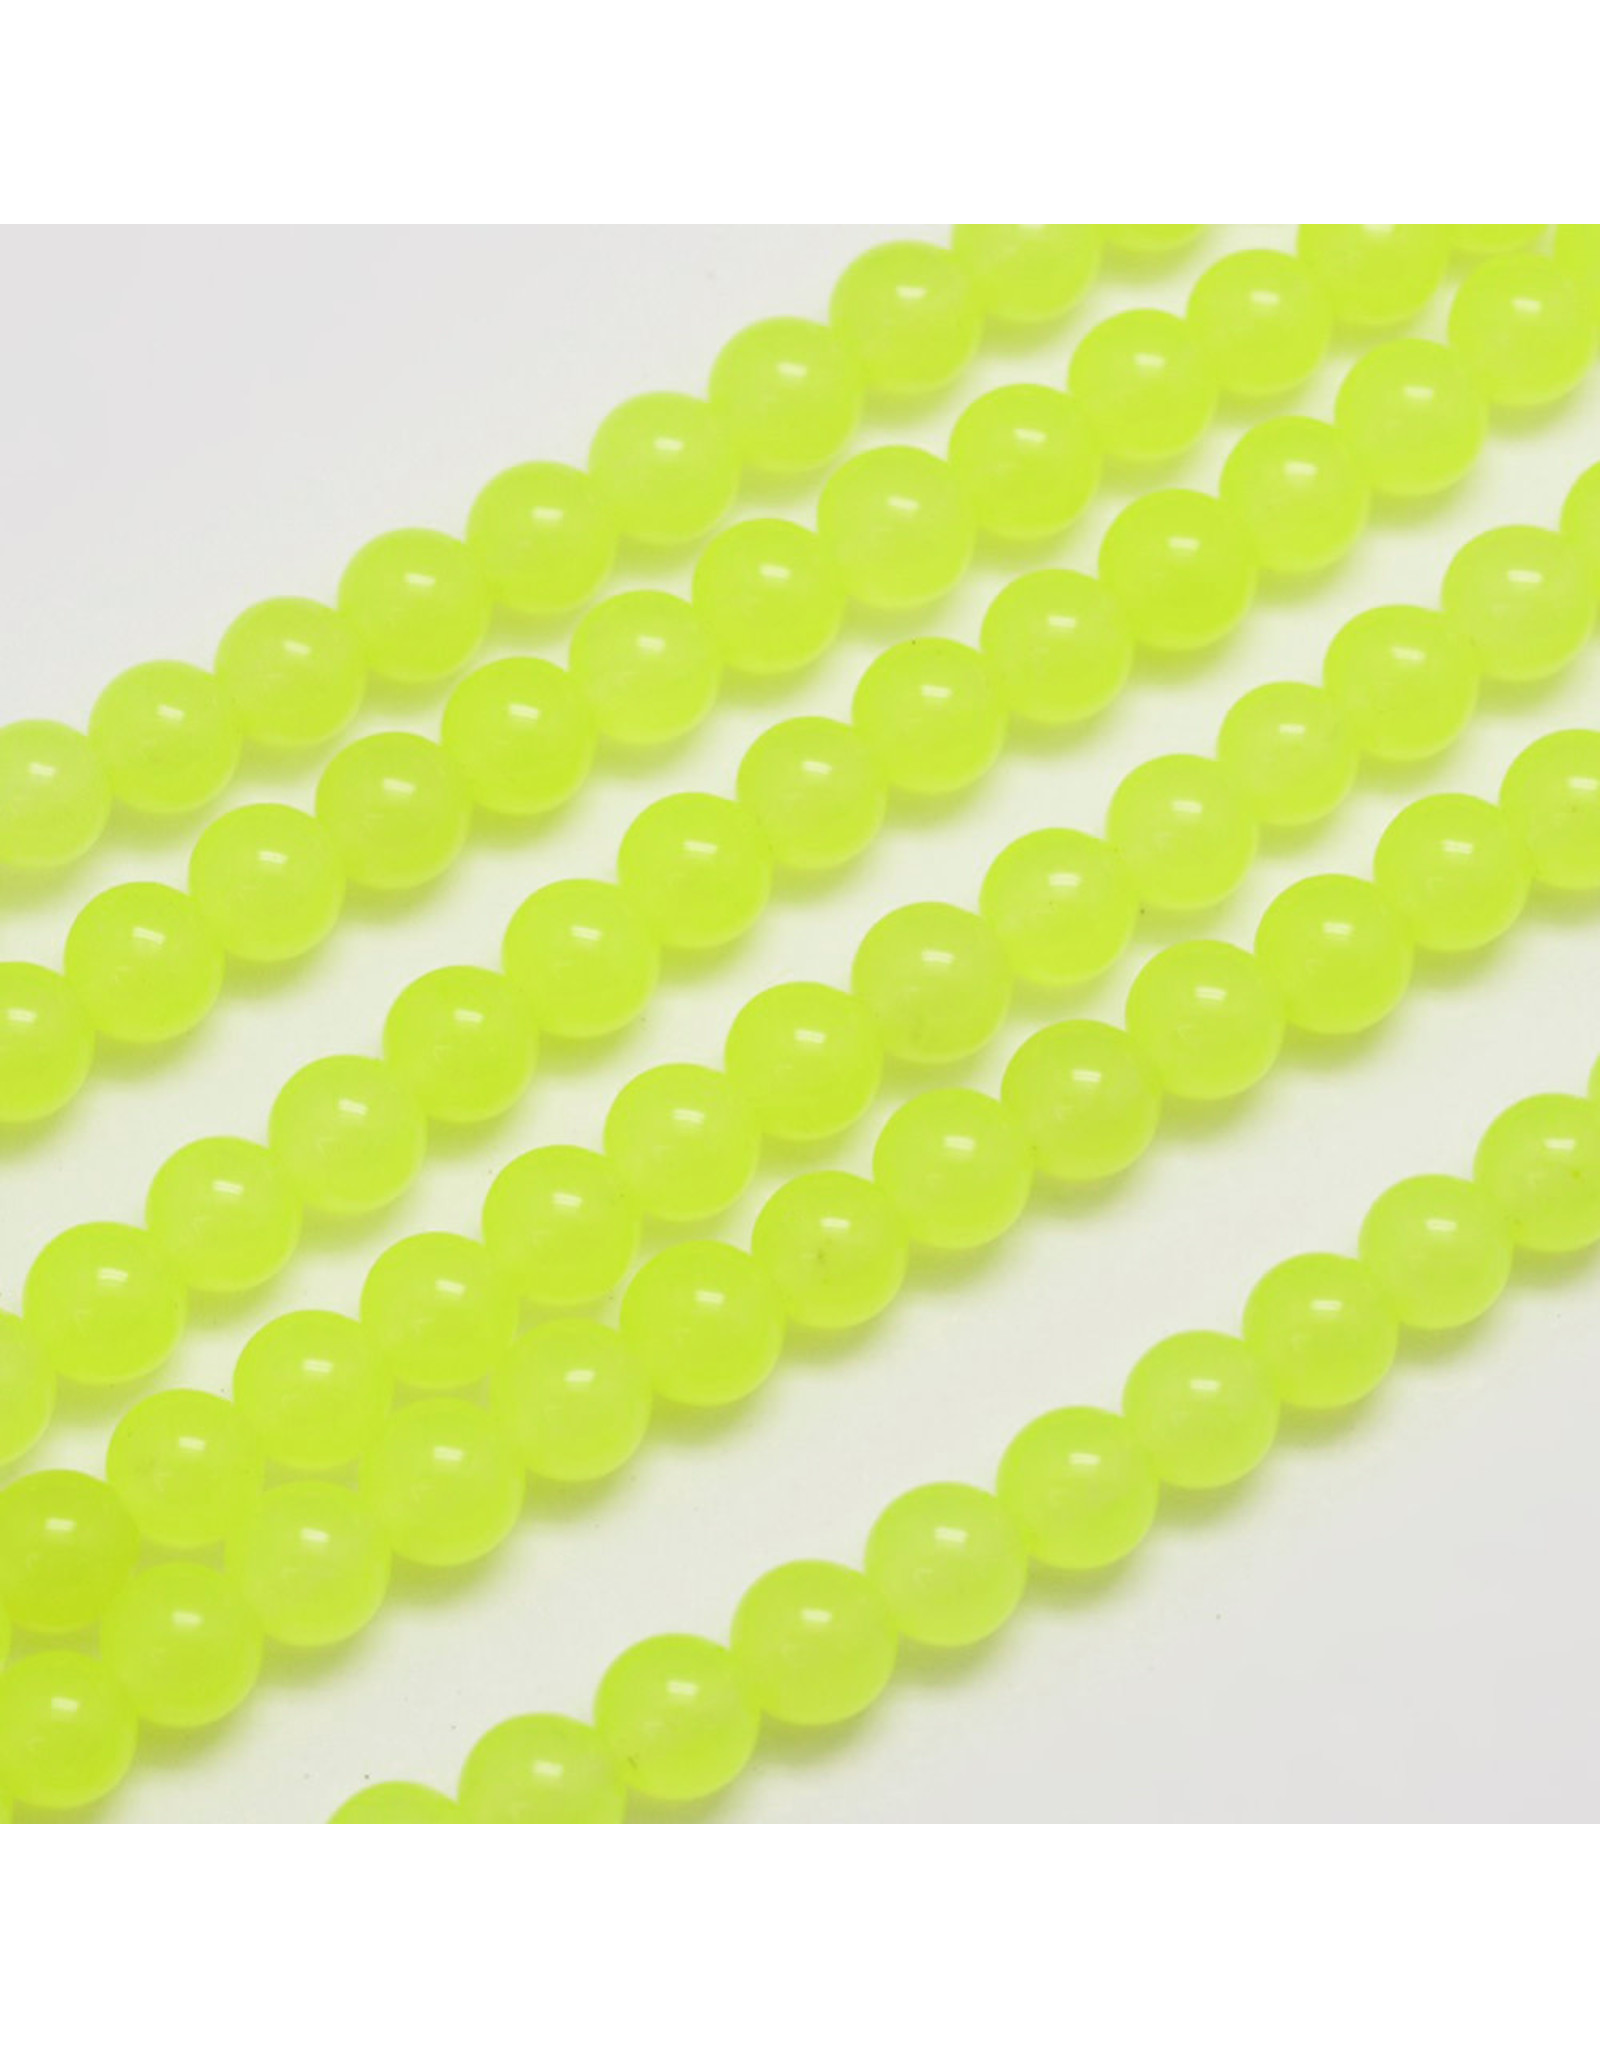 Malaysia  Jade Dyed 6mm Bright Yellow  15" Strand  apprx 60 beads